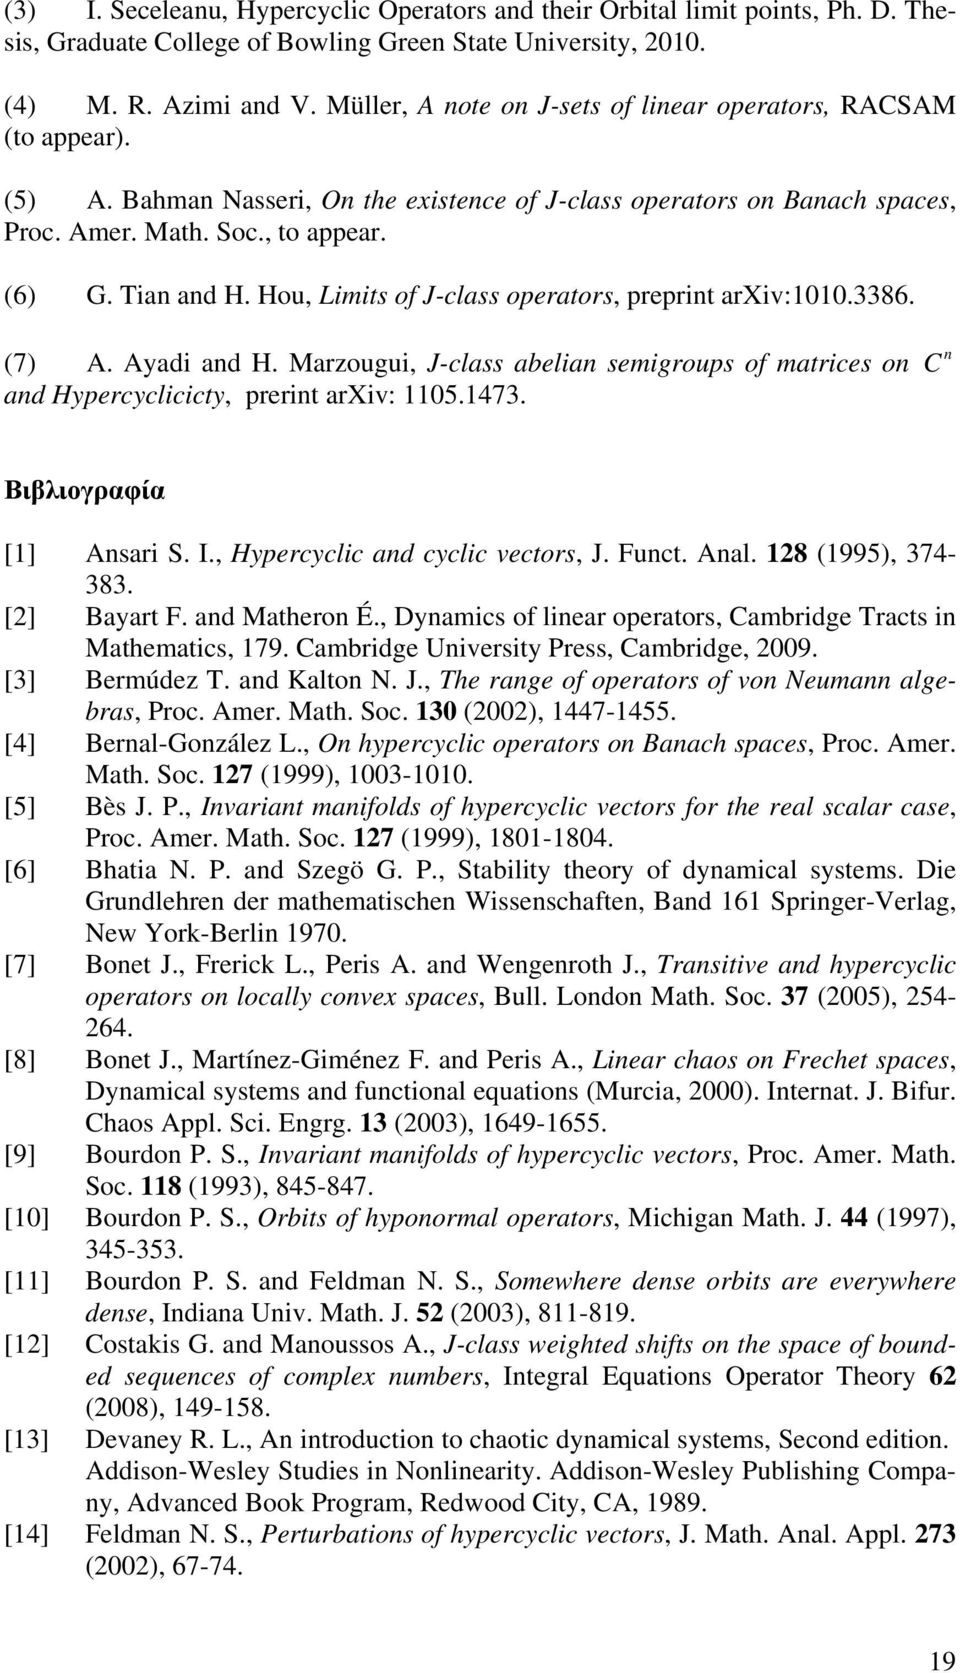 Hou, Limits of J-class operators, preprit arxiv:1010.3386. (7) A. Ayadi ad H. Marzougui, J-class abelia semigroups of matrices o ad Hypercyclicicty, prerit arxiv: 1105.1473.